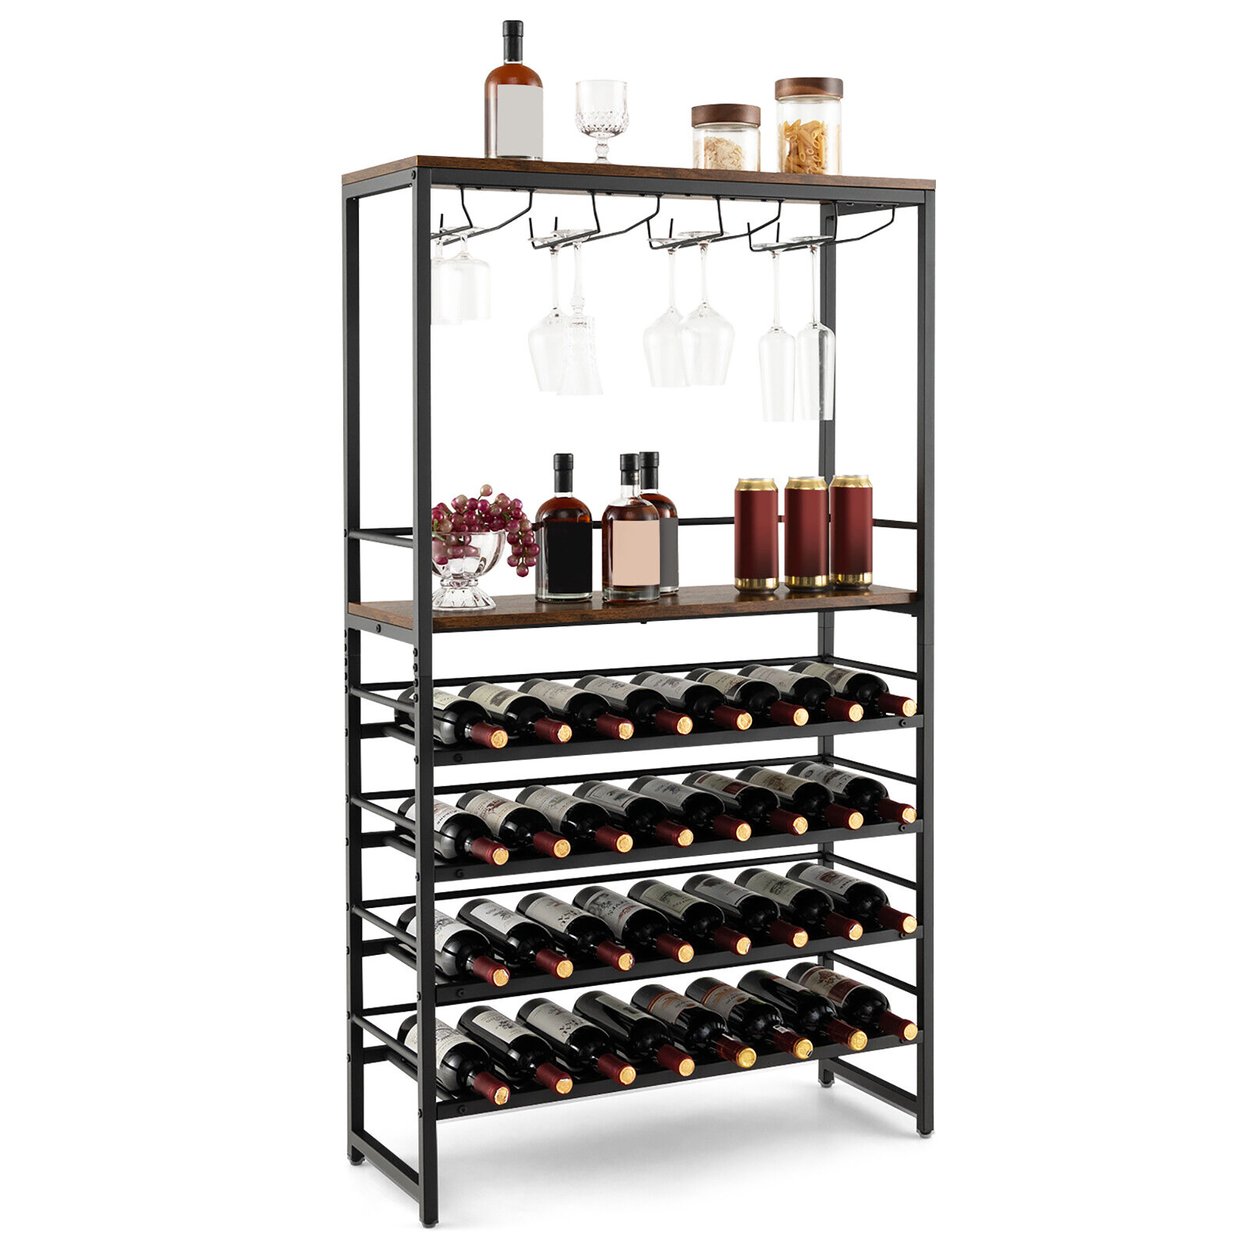 32 Bottles Wine Rack Rustic Wine Storage Holder Freestanding W/ Glass Holder